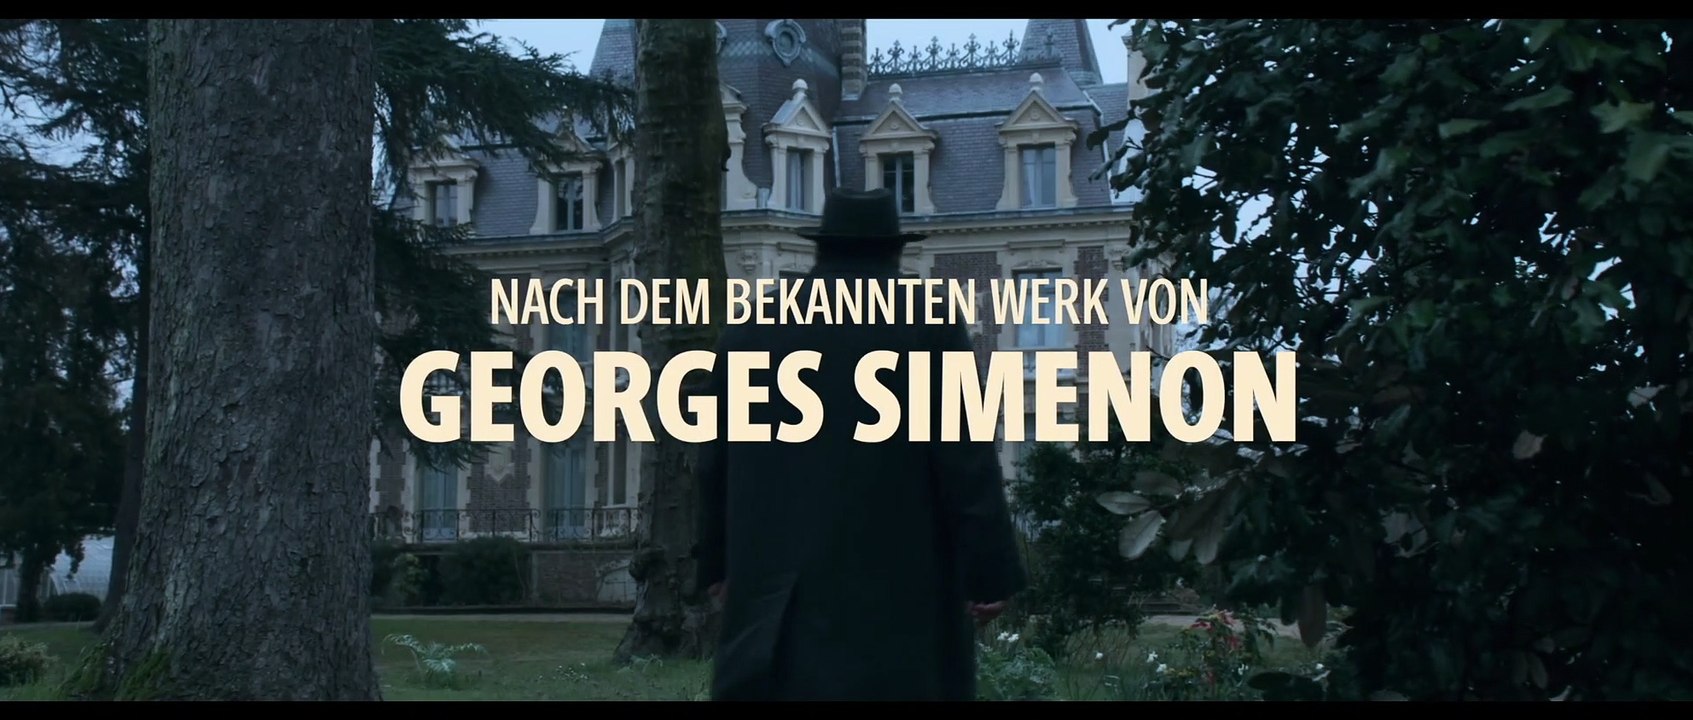 Maigret Film - Mit Gérard Depardieu, Aurore Clément, und Patrice Leconte